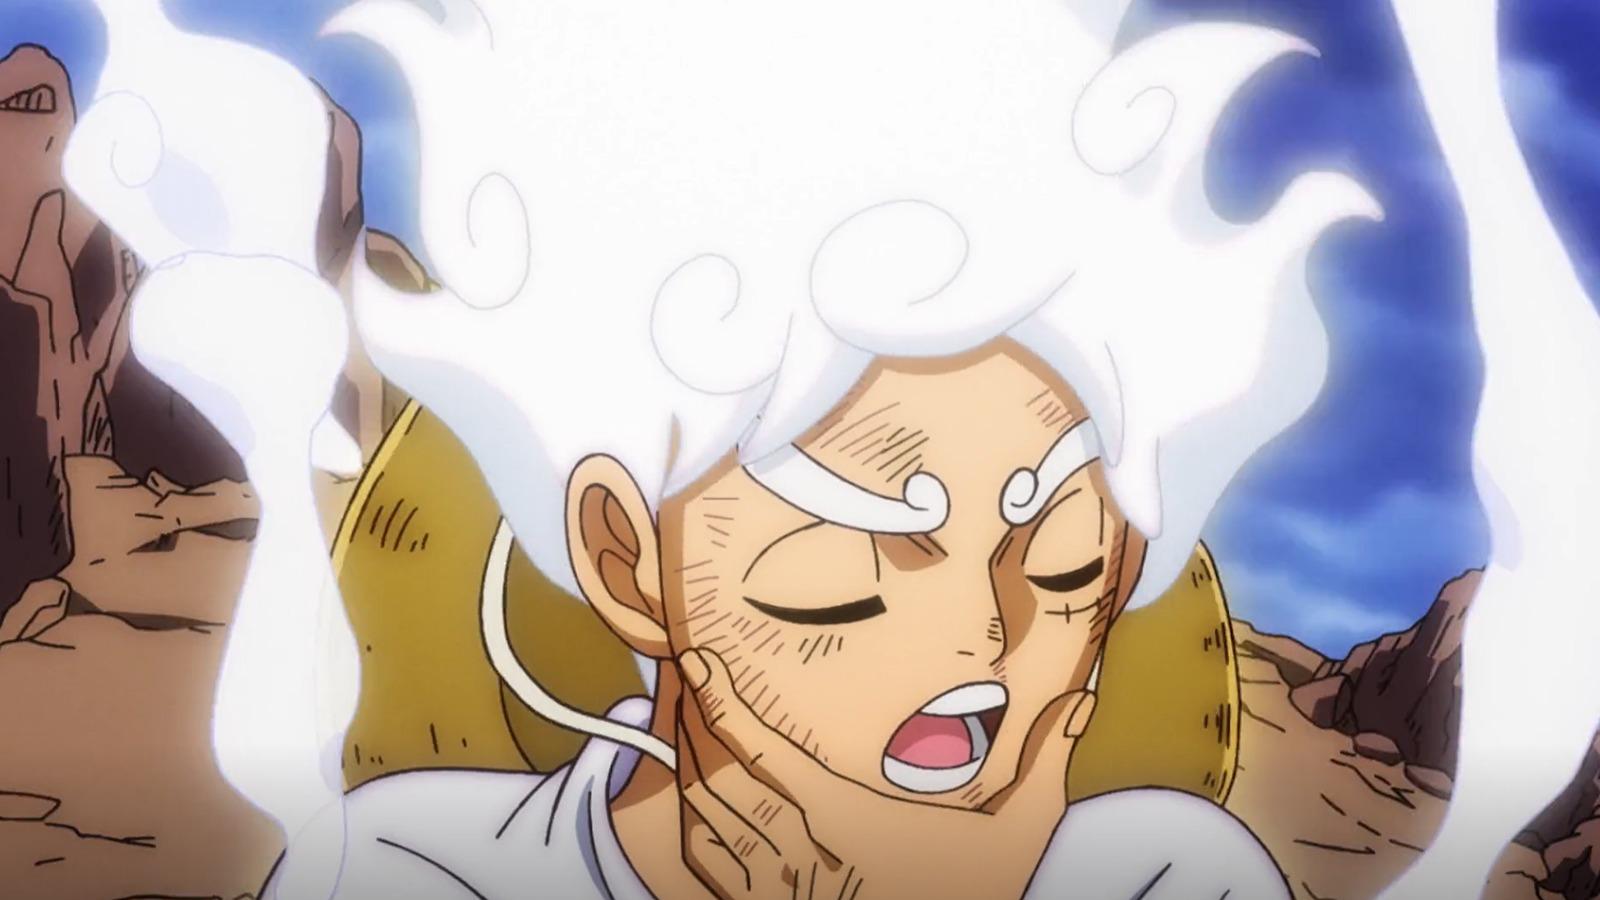 A still from One Piece Luffy Gear 5 episode